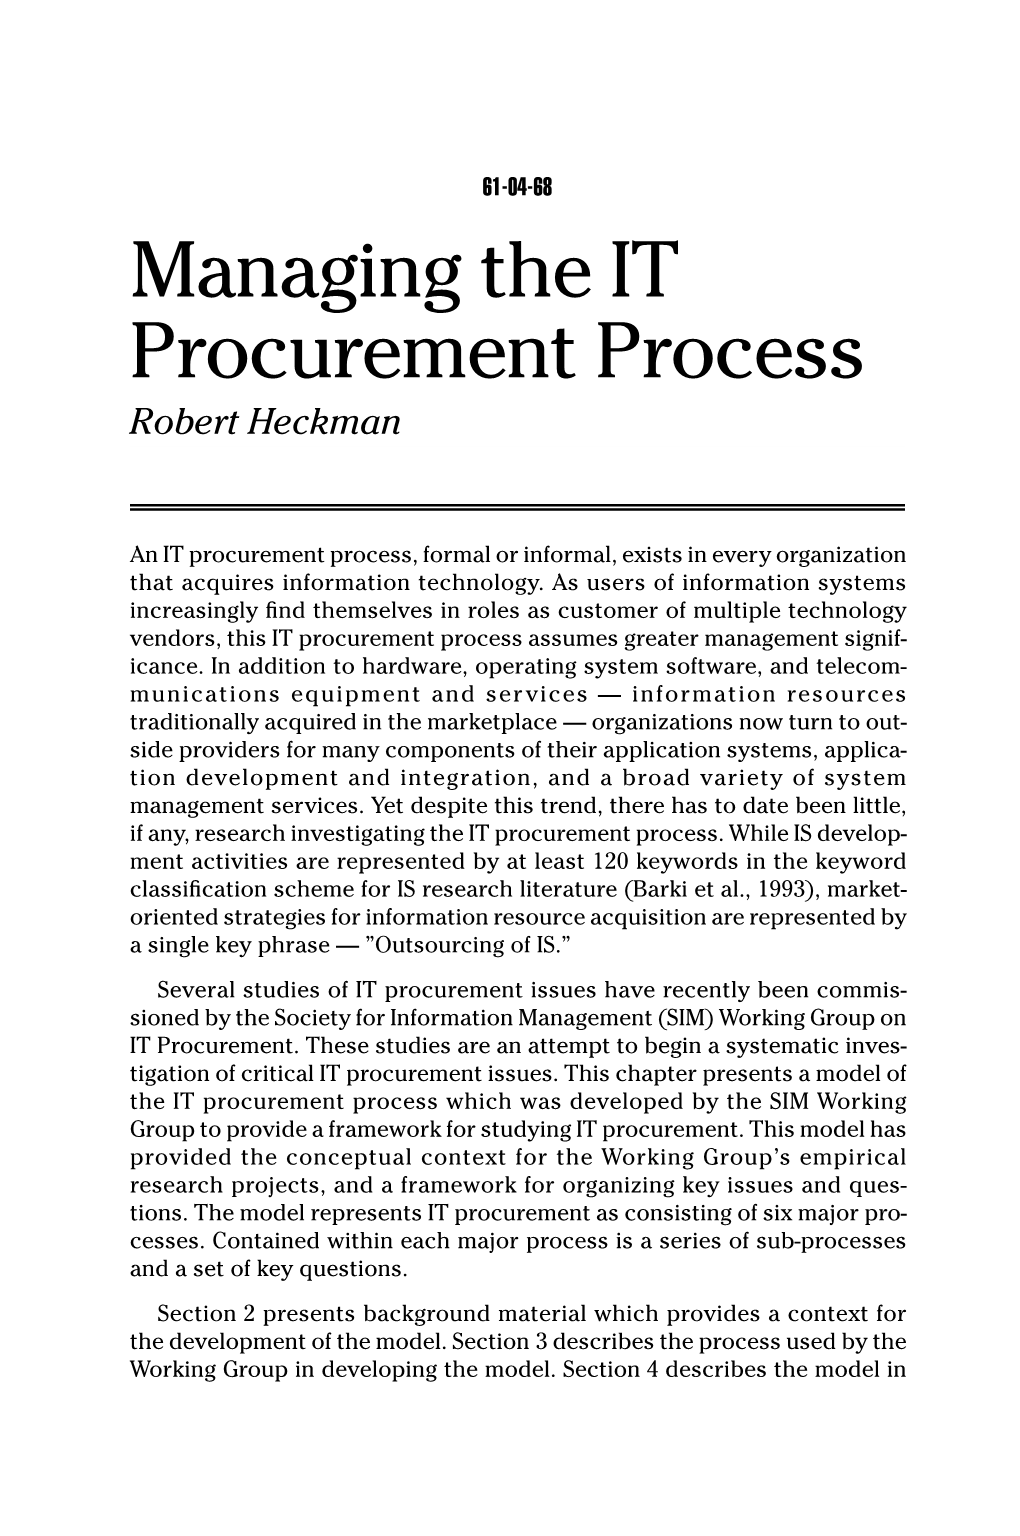 Managing the IT Procurement Process Robert Heckman